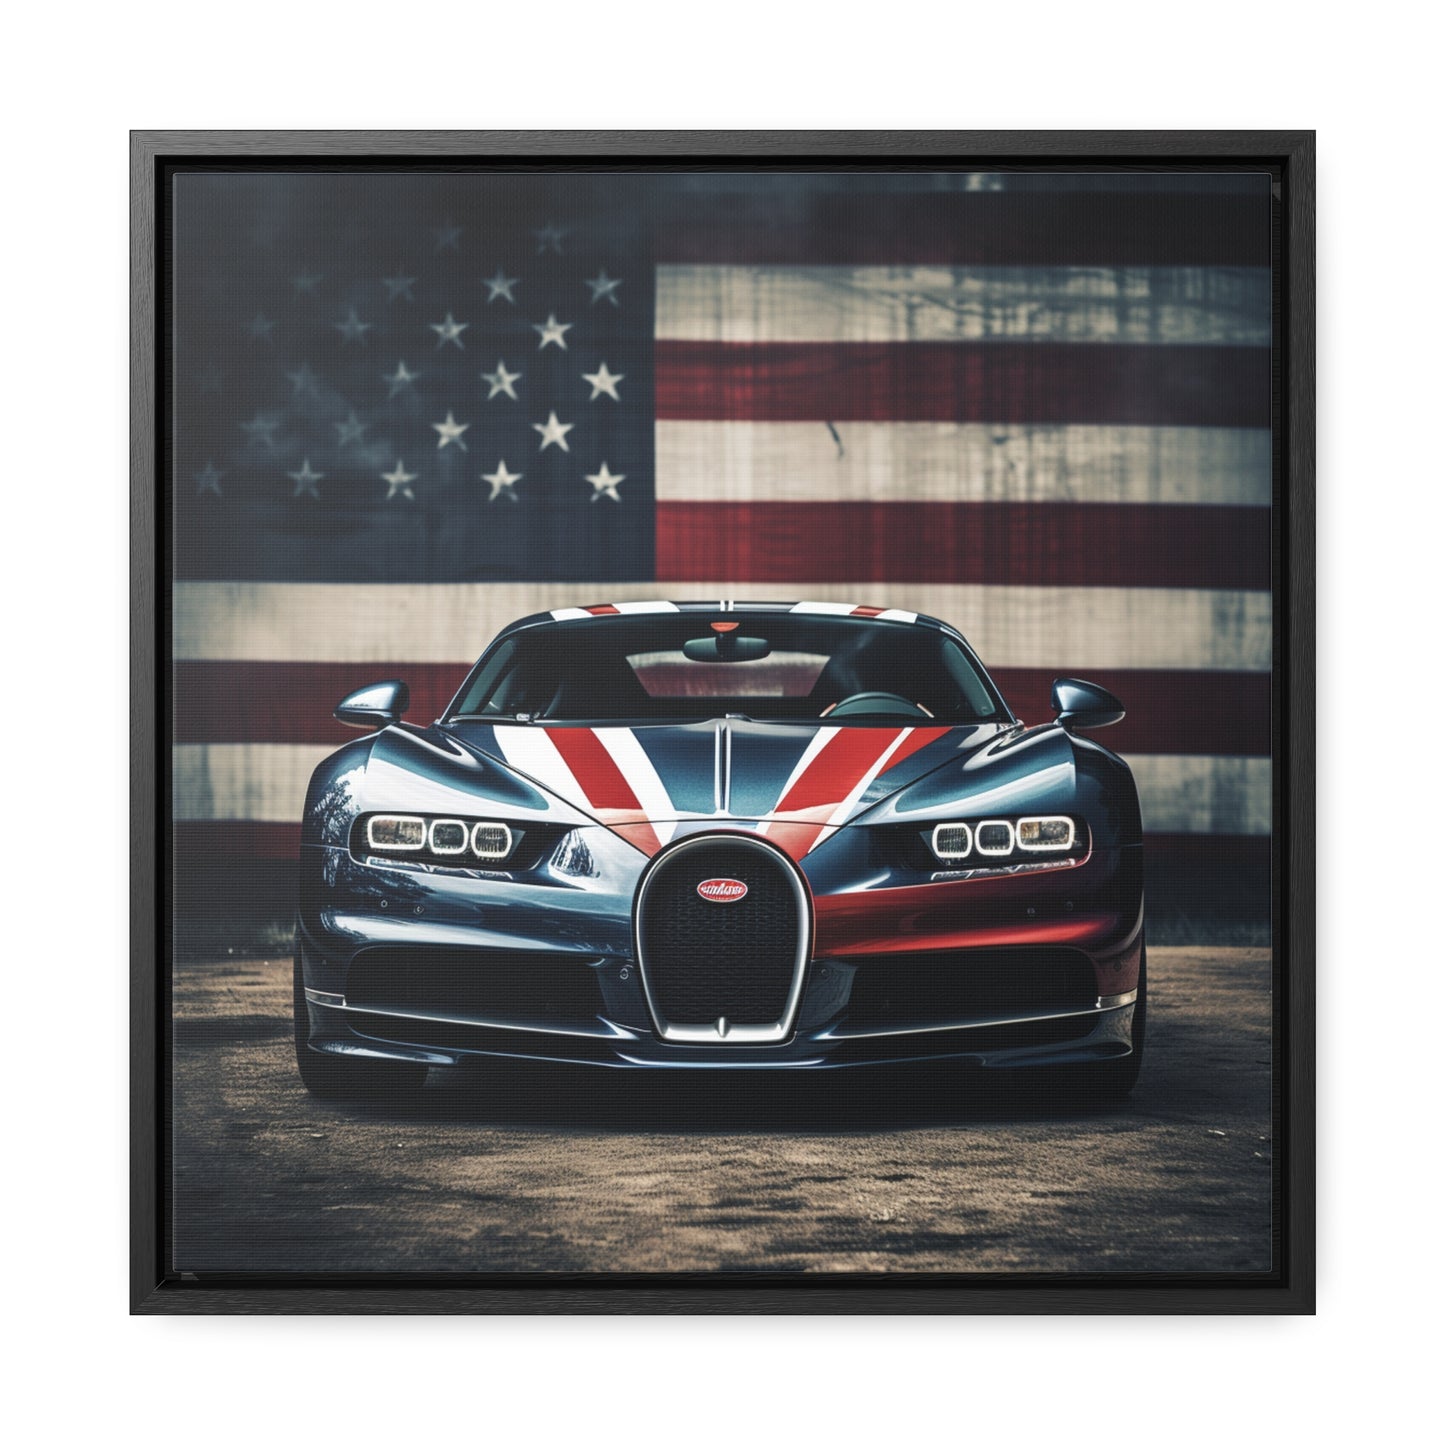 Gallery Canvas Wraps, Square Frame Bugatti Flag 2